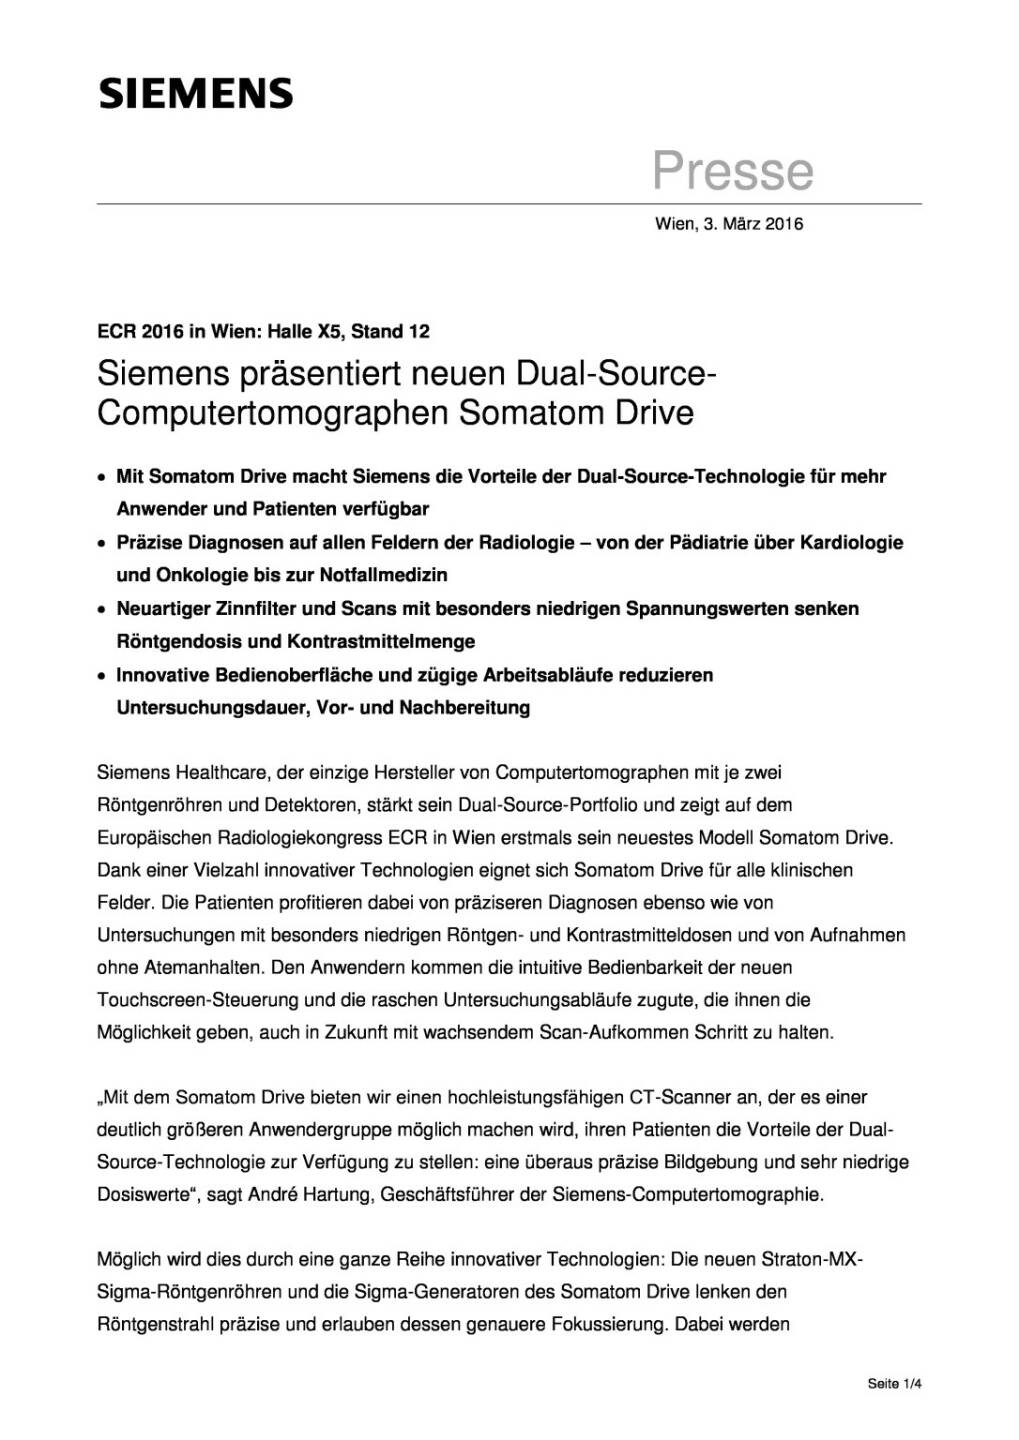 Siemens präsentiert neuen Dual-Source-Computertomographen Somatom Drive, Seite 1/4, komplettes Dokument unter http://boerse-social.com/static/uploads/file_720_siemens_prasentiert_neuen_dual-source-computertomographen_somatom_drive.pdf